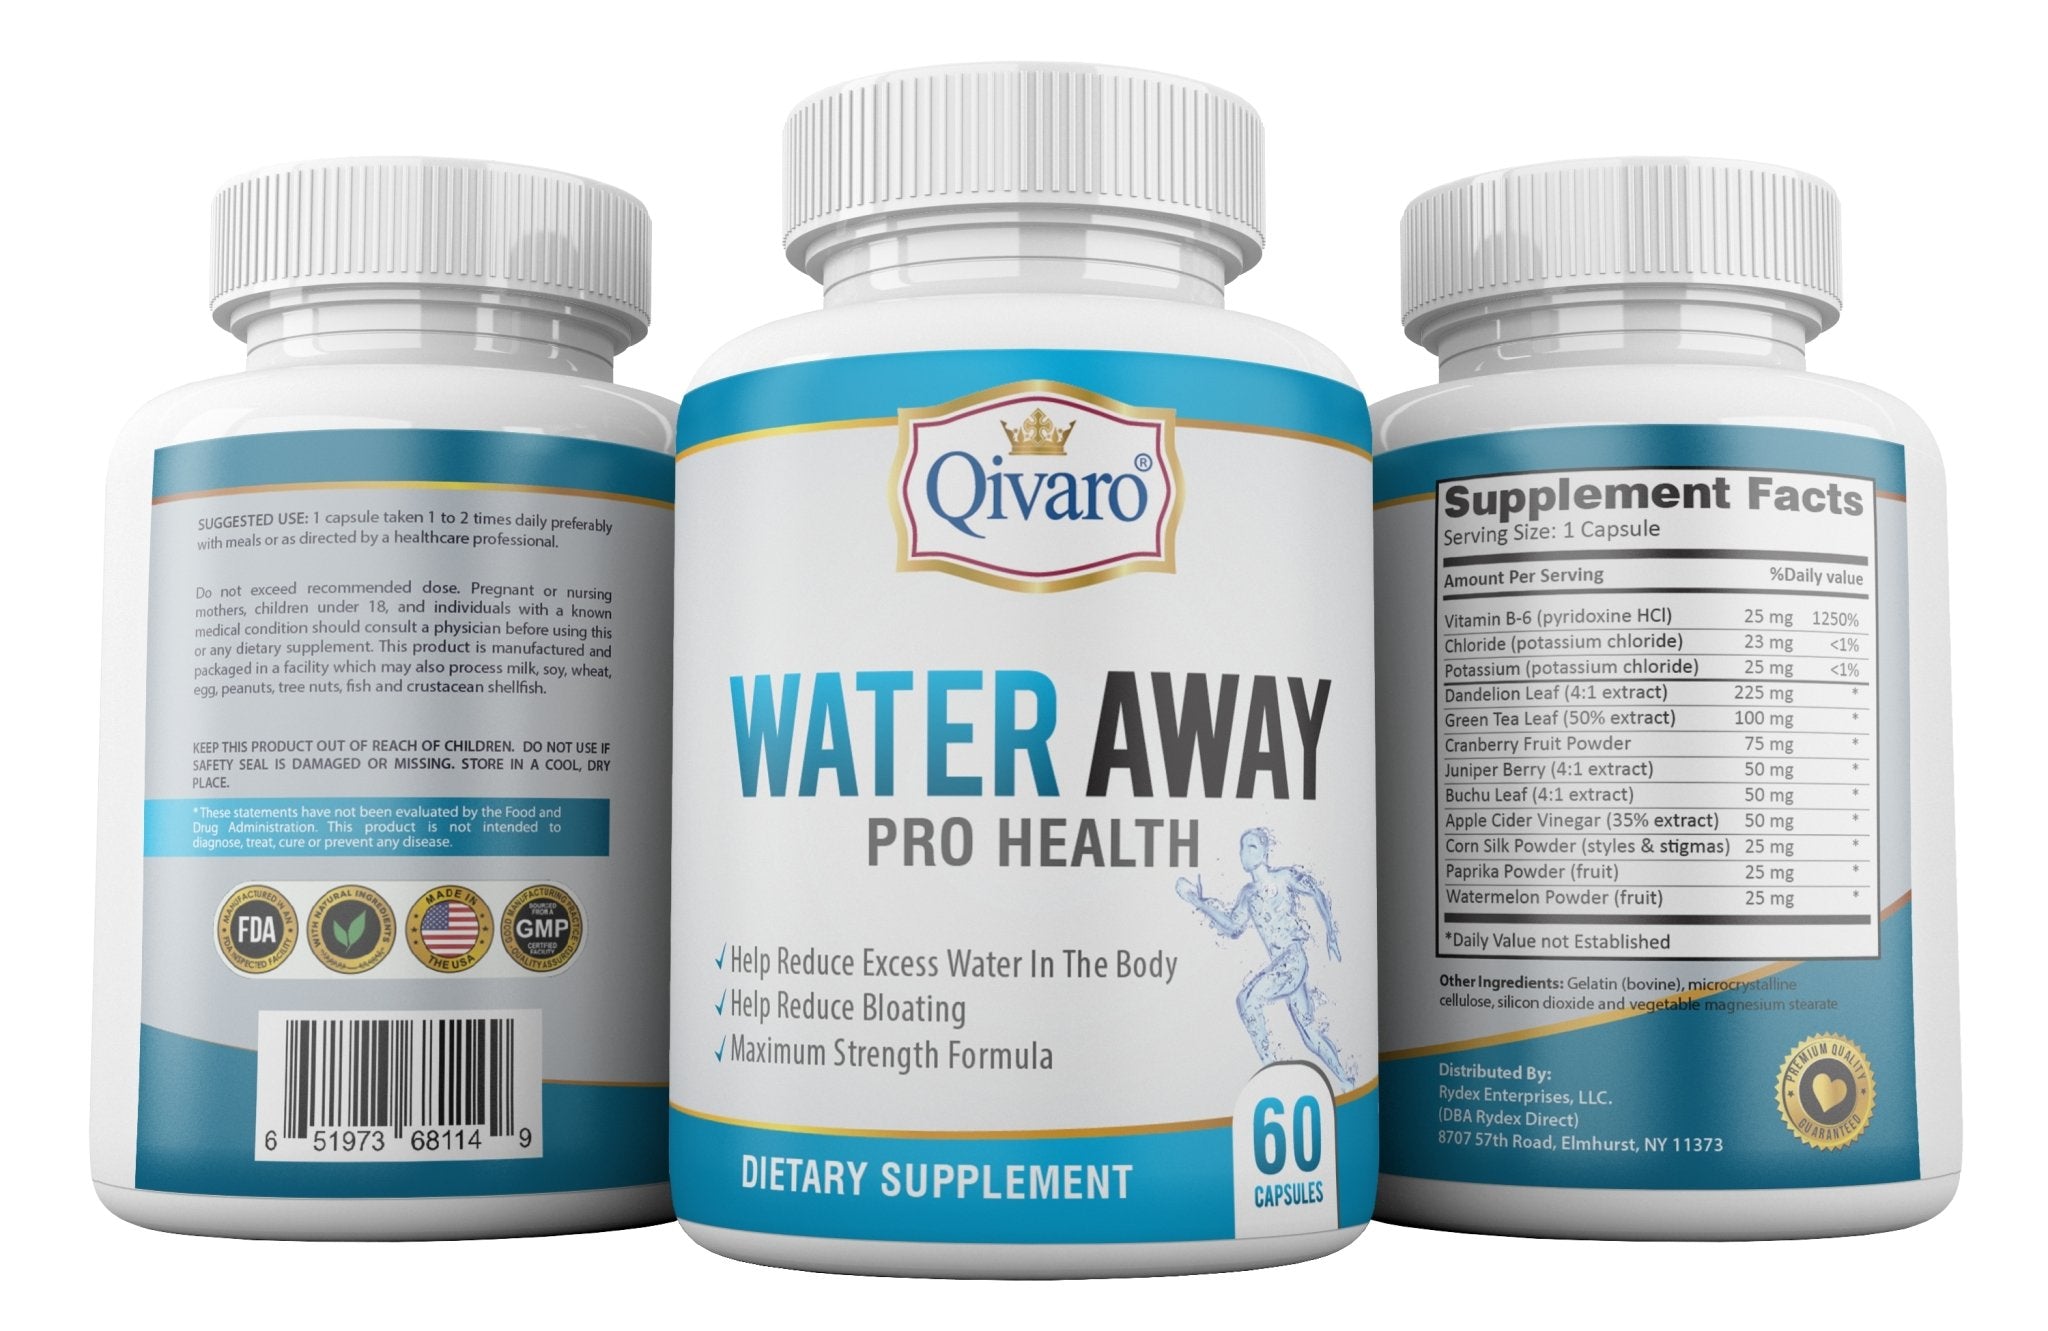 Water Away Pro Health 草本排水寶 (60 caps) - Qivaro USA